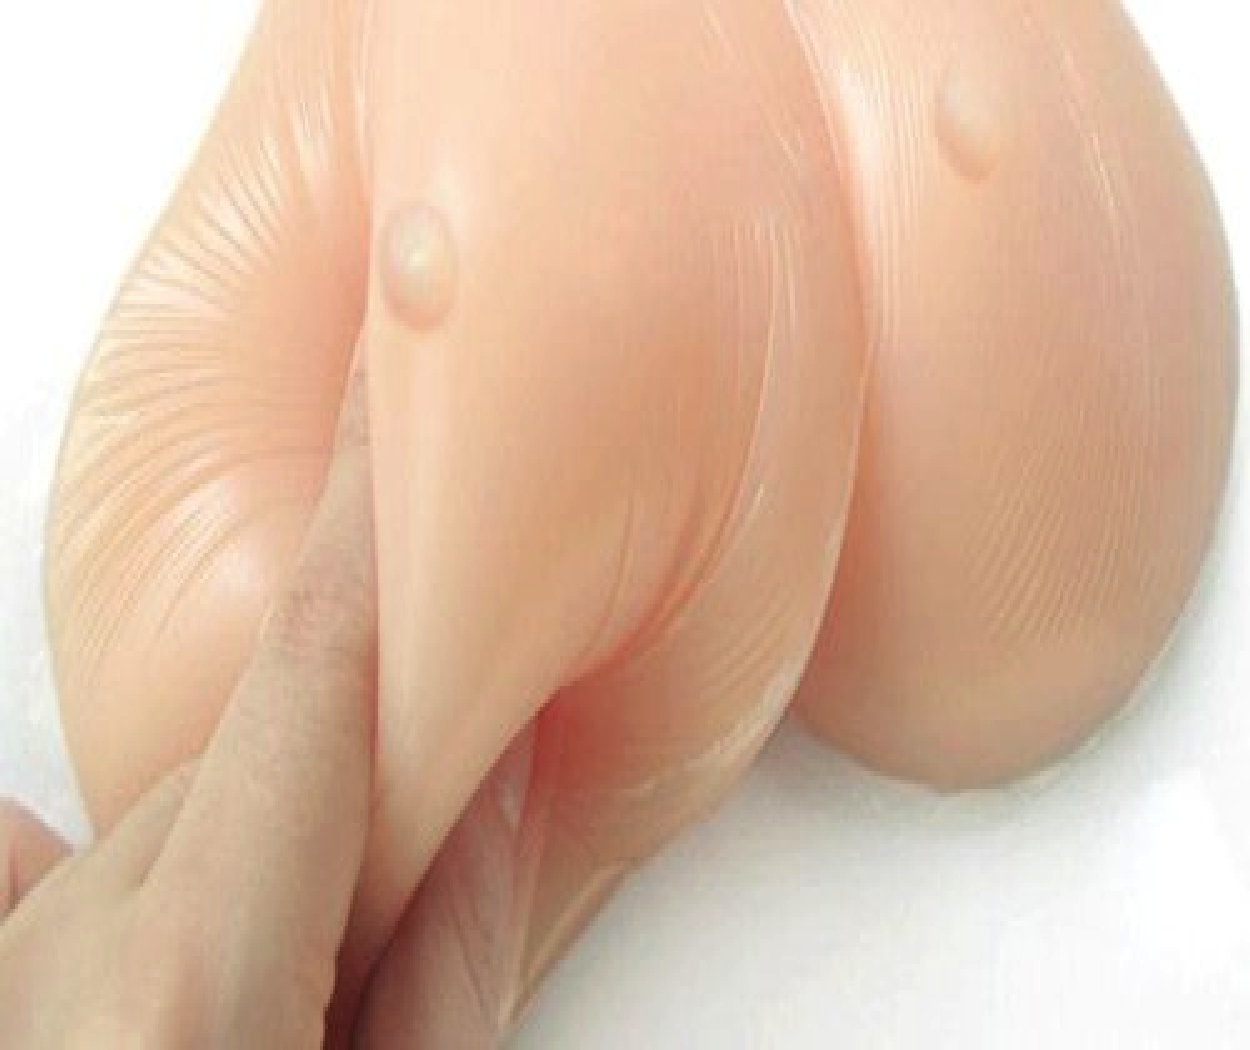 NuBra Invisible Silicone Non Adhesive Breast Enhancers - Envy Body Shop